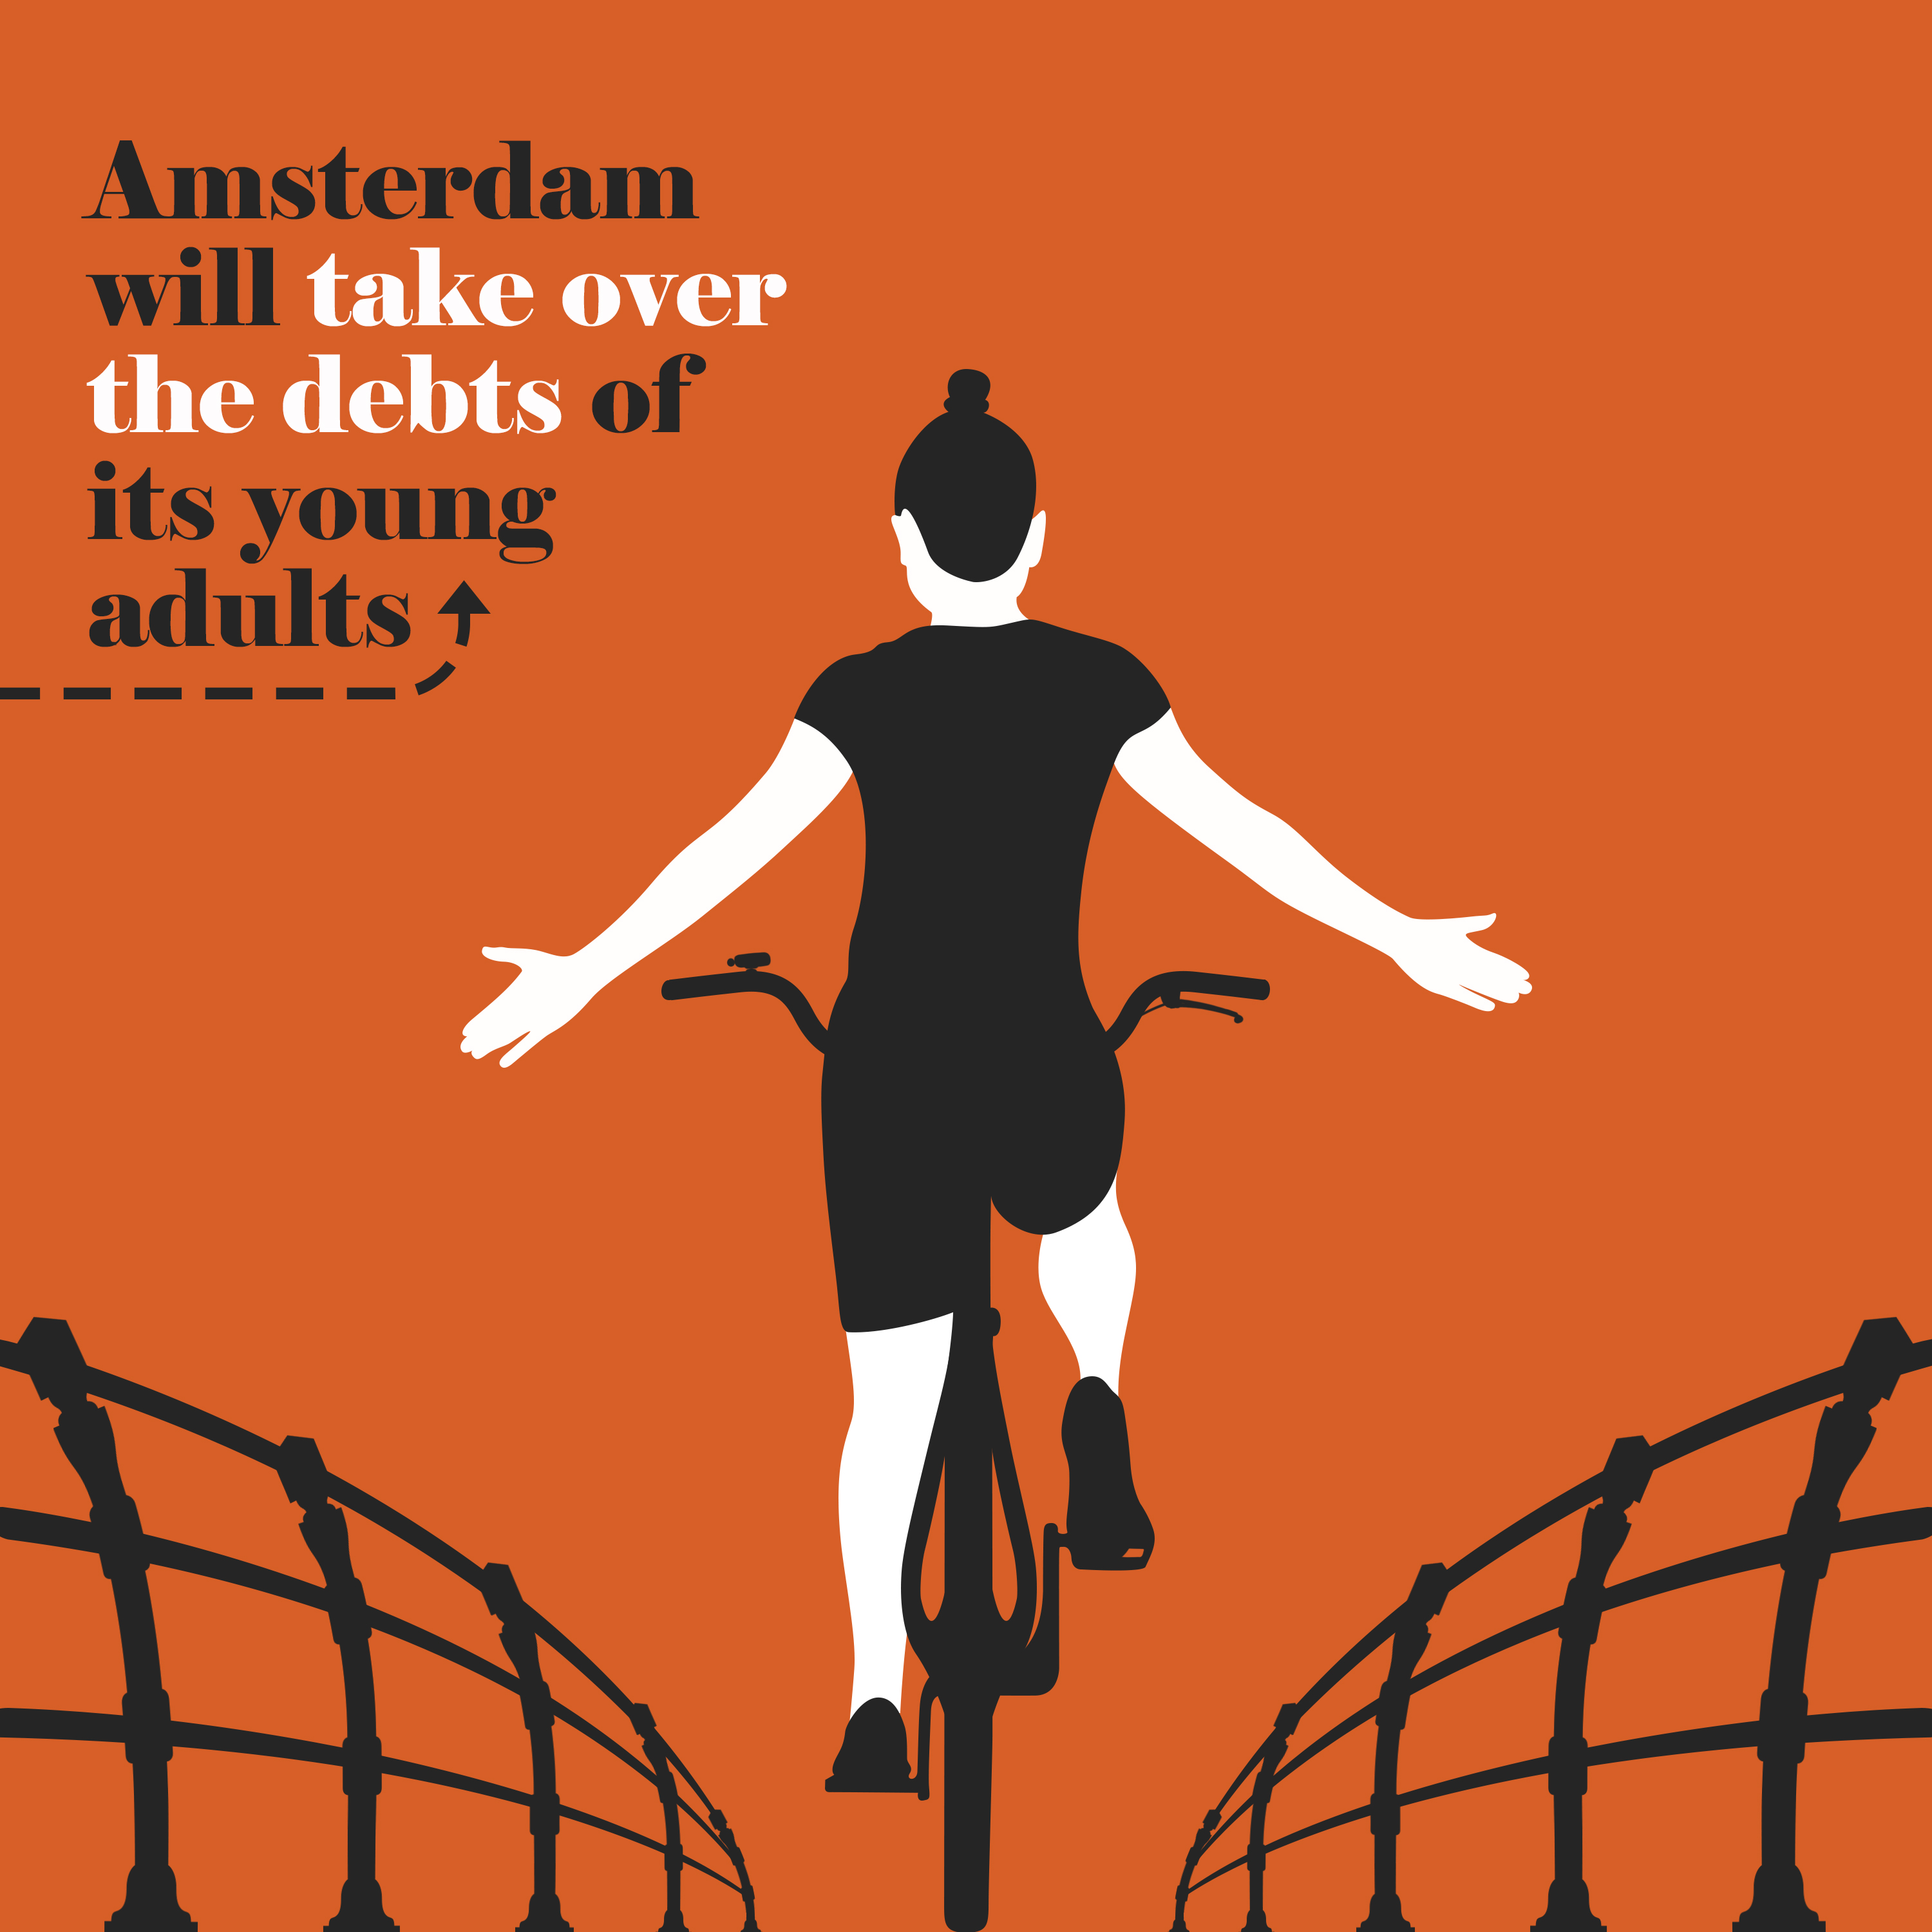 Amsterdam debt